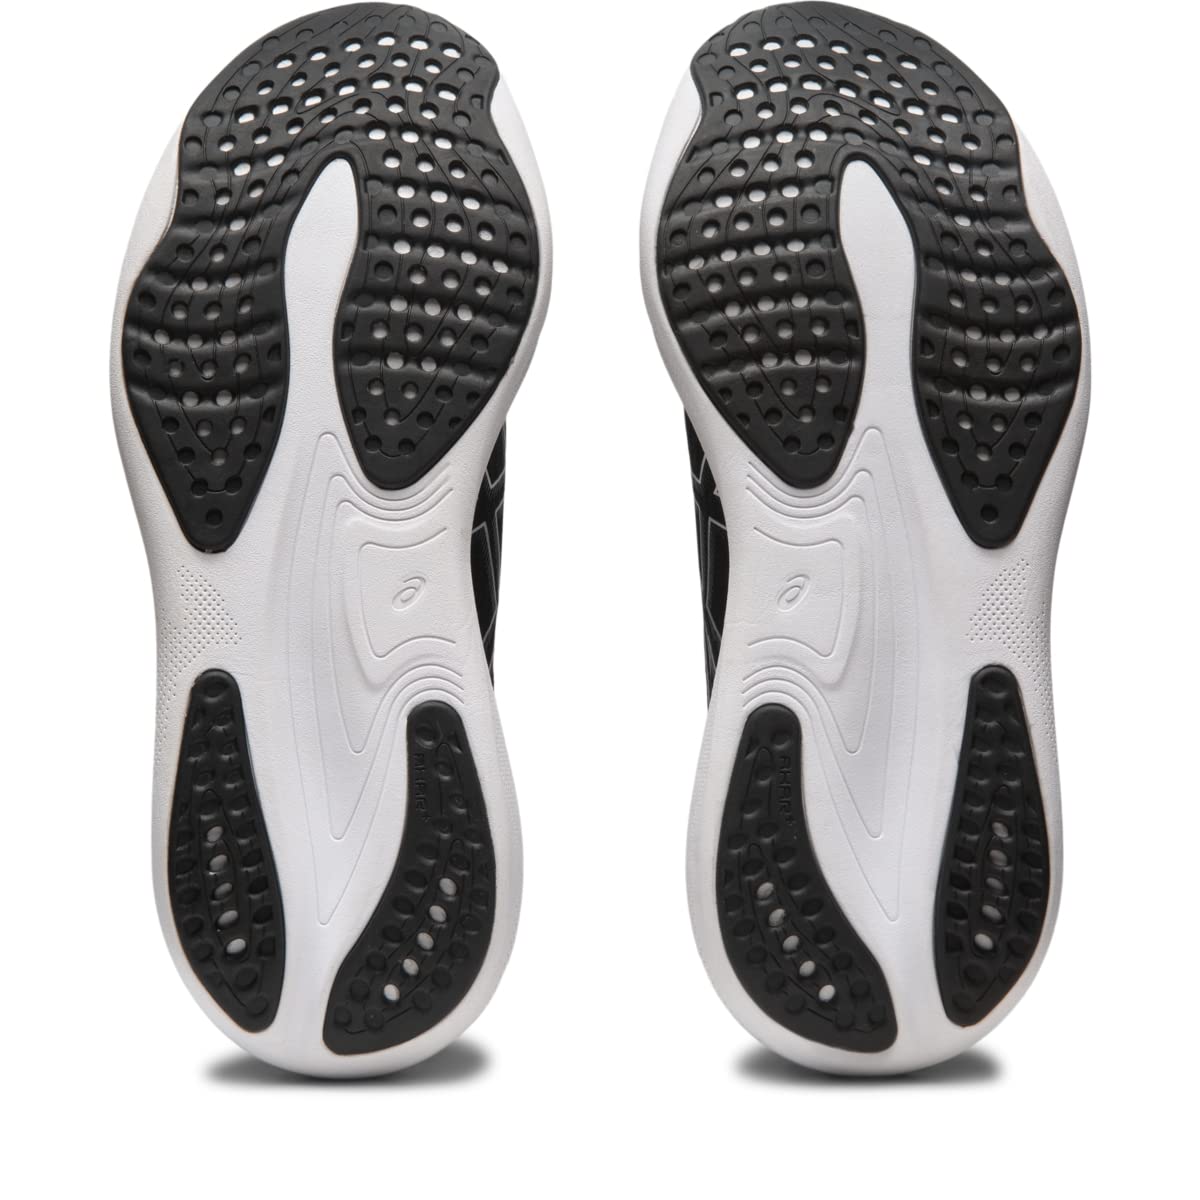 ASICS Men's Gel-Nimbus 25 Running Shoes